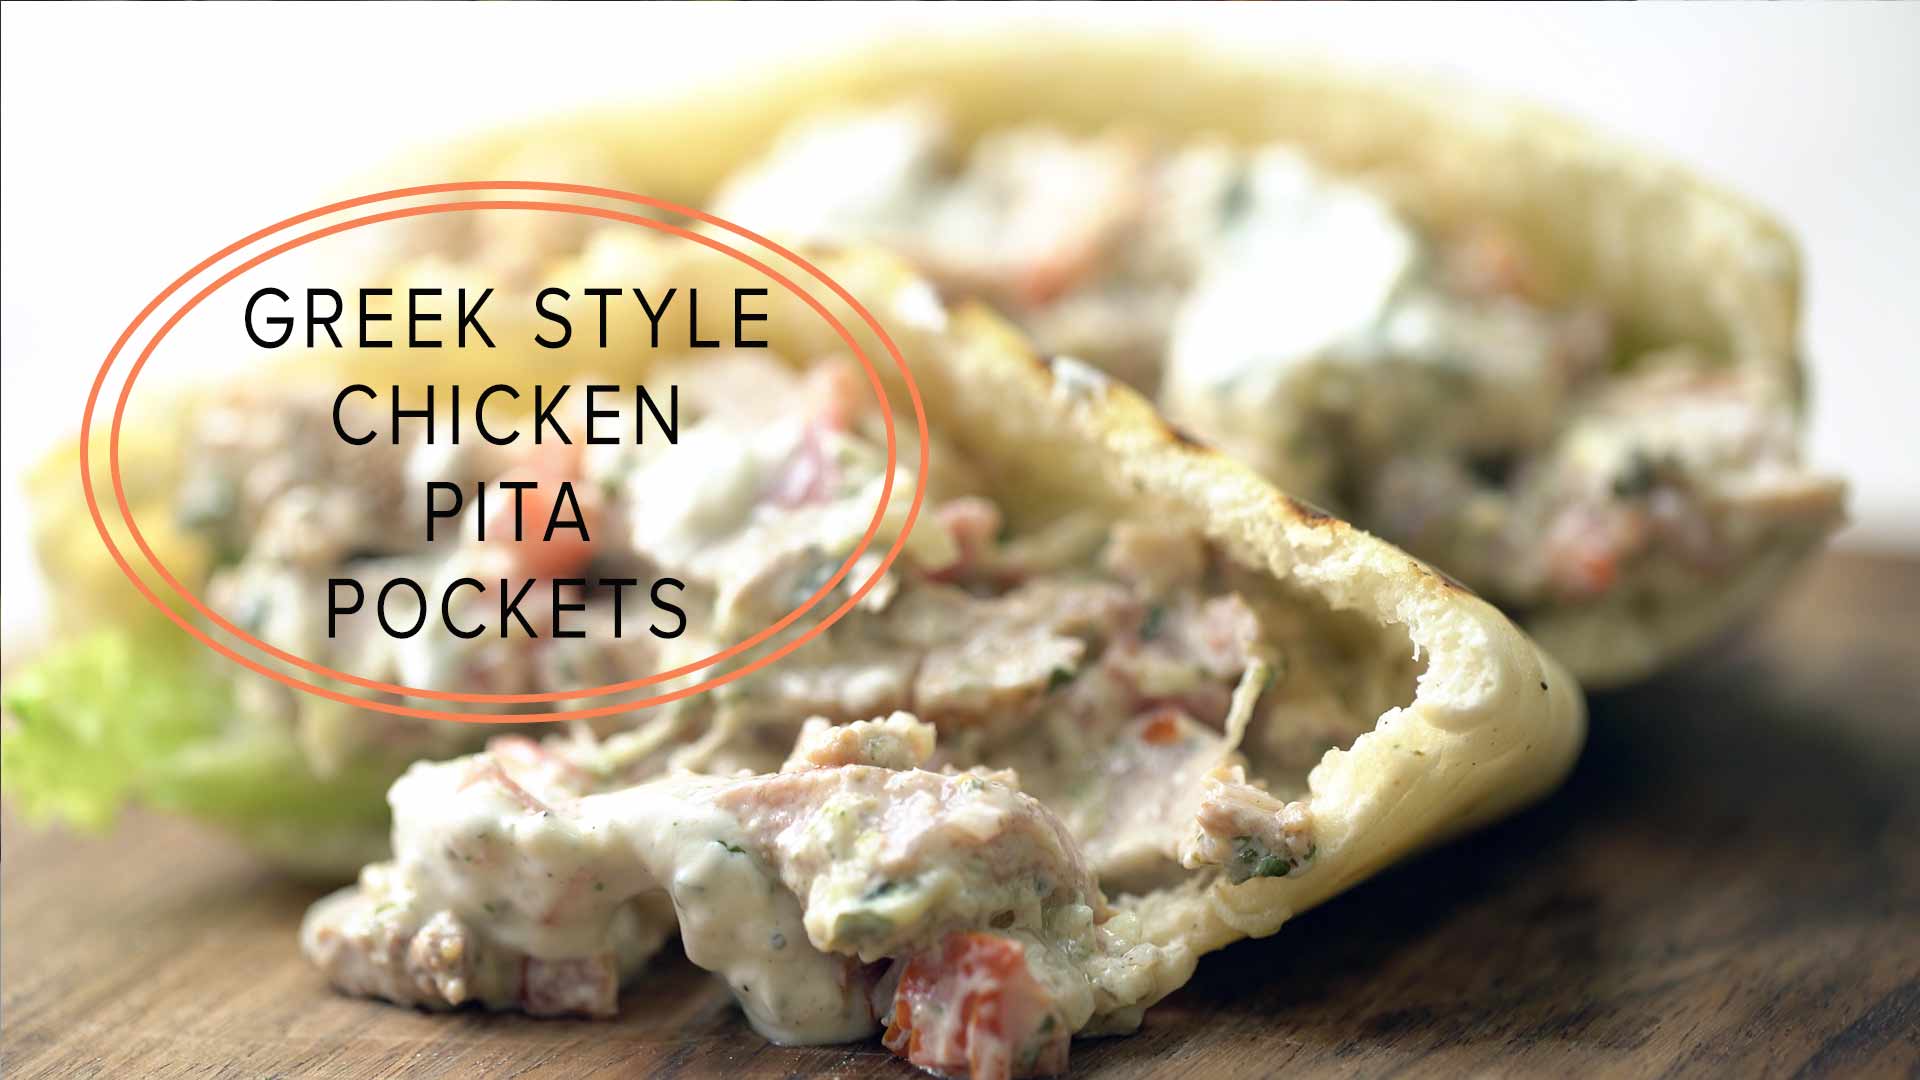 Finger licking good Greek Style Grilled Chicken Pita